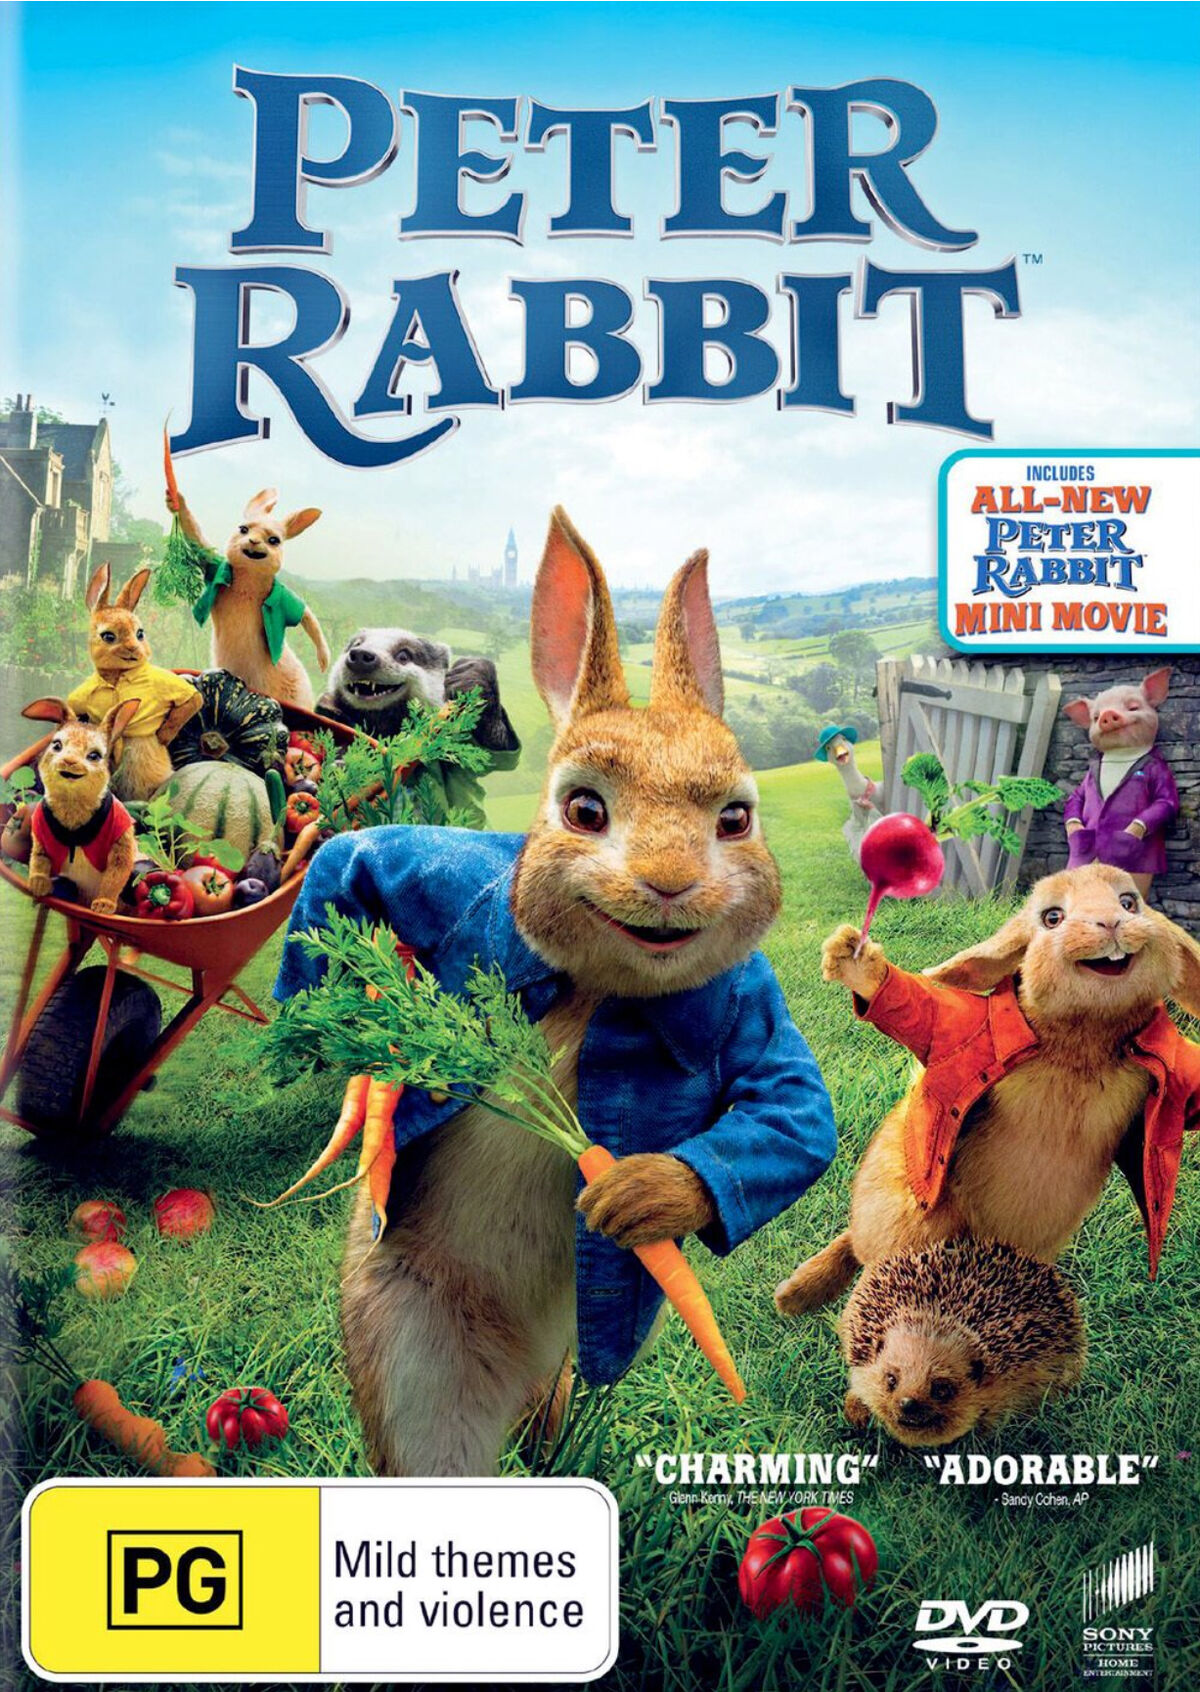 Peter Rabbit (2018) Movie Information & Trailers